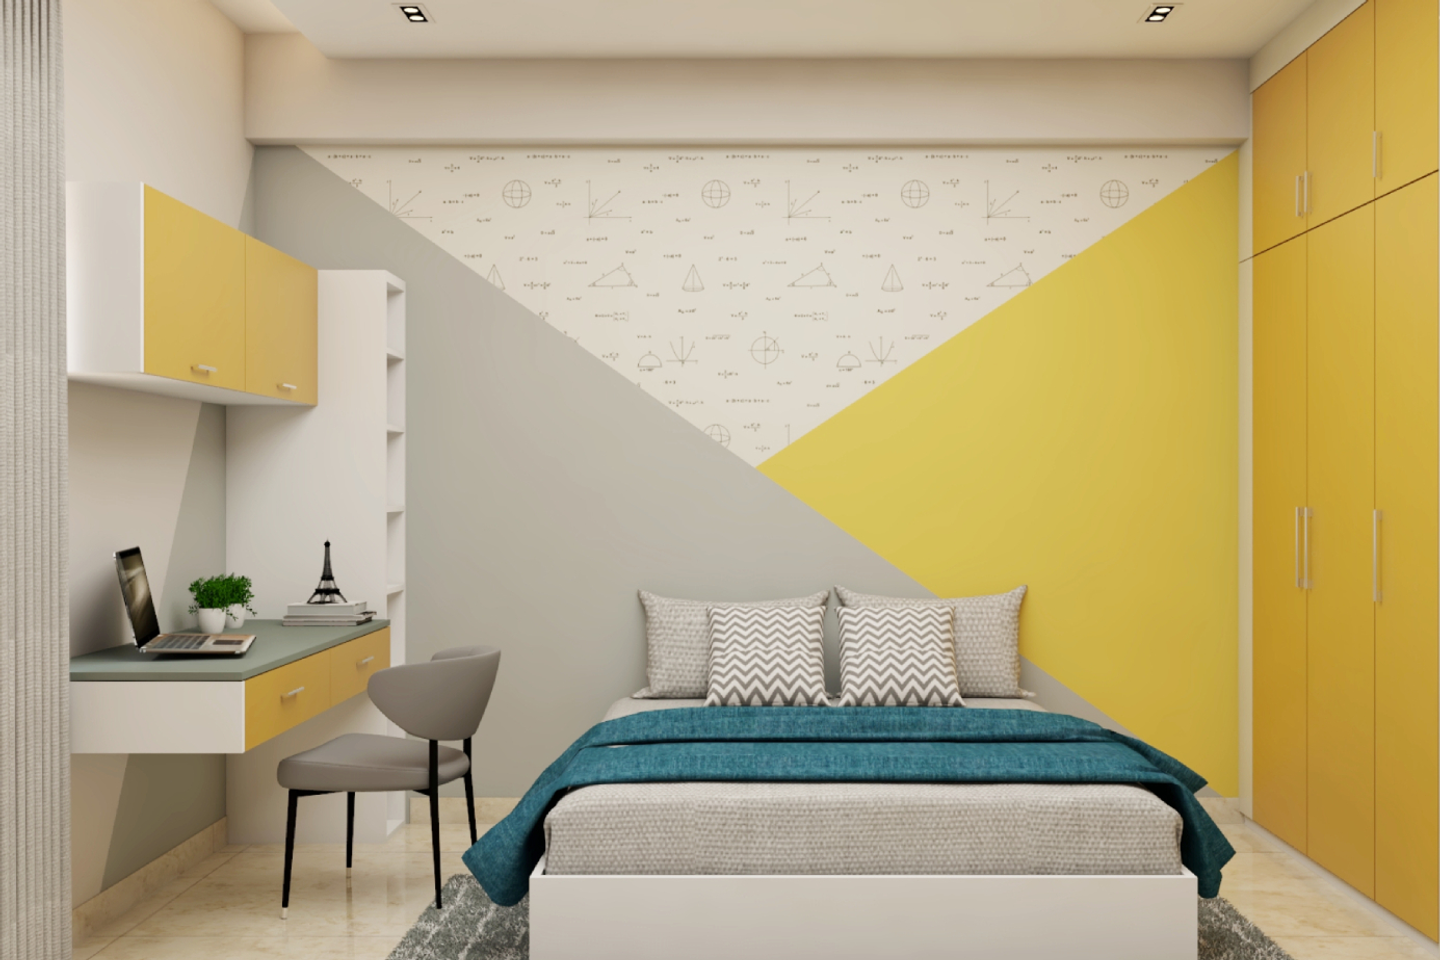 Spacious Bedroom in Vibrant Yellow - Livspace